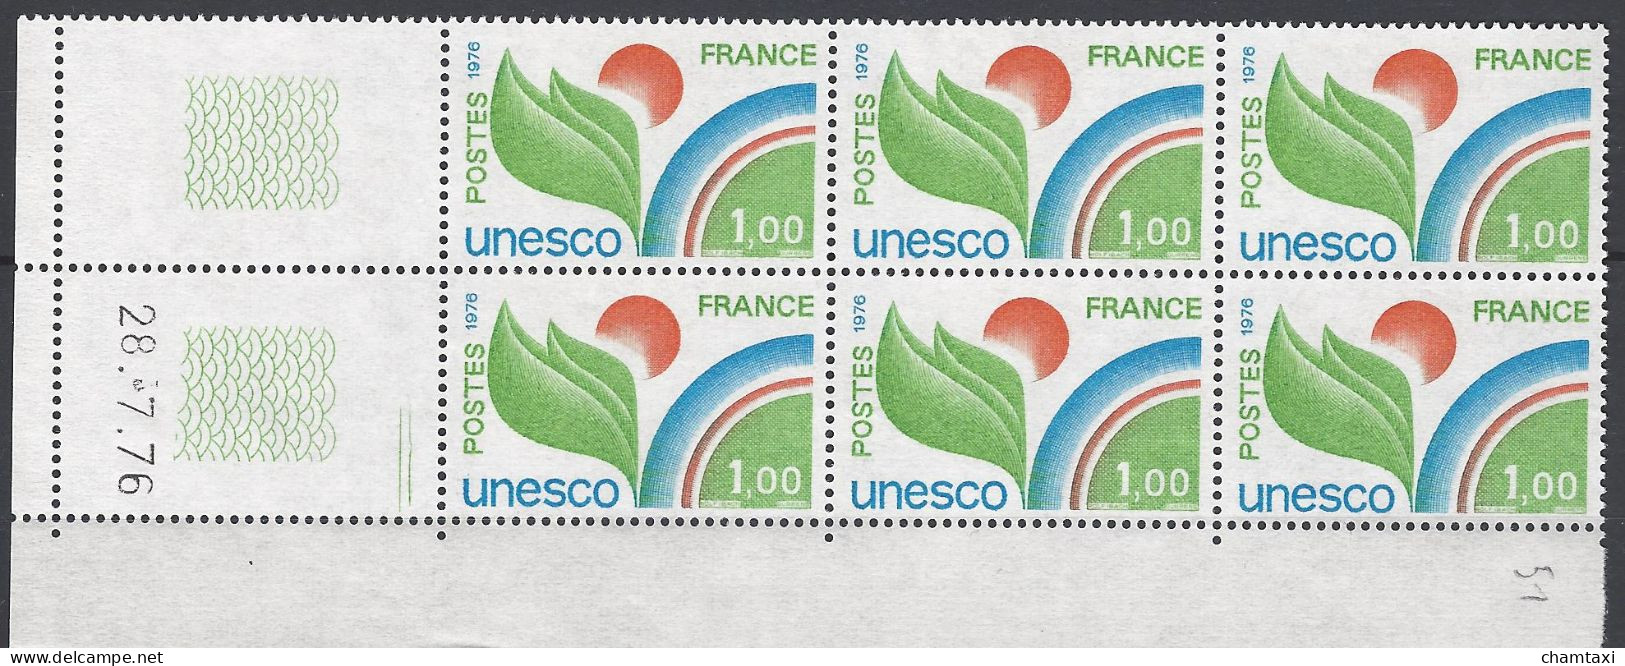 CD 51 FRANCE 1976 TIMBRE SERVICE UNESCO COIN DATE 51 : 28 / 7 / 76 - Dienstmarken